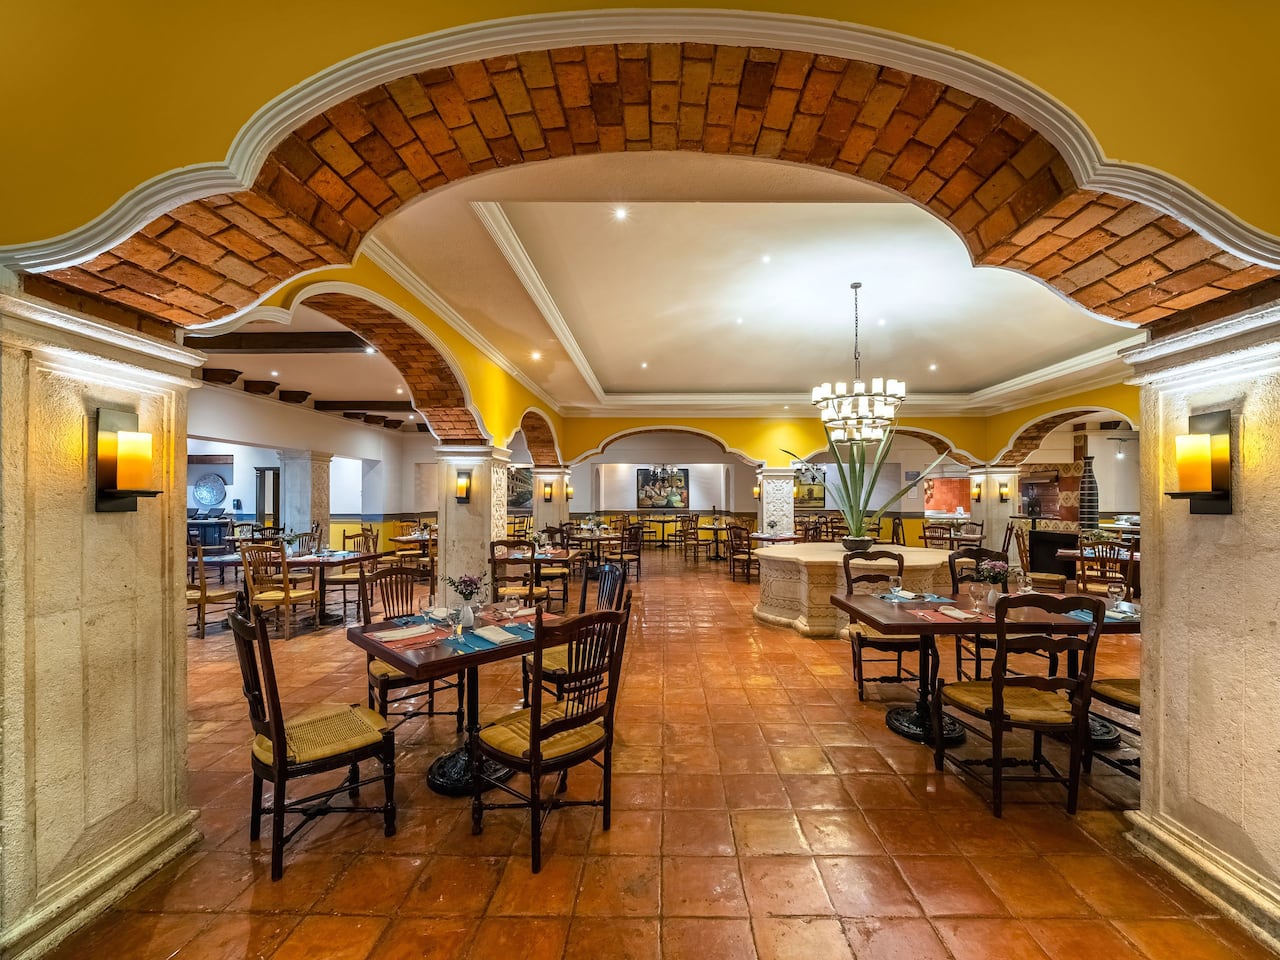 peregrina bistro restaurant in merida mexico